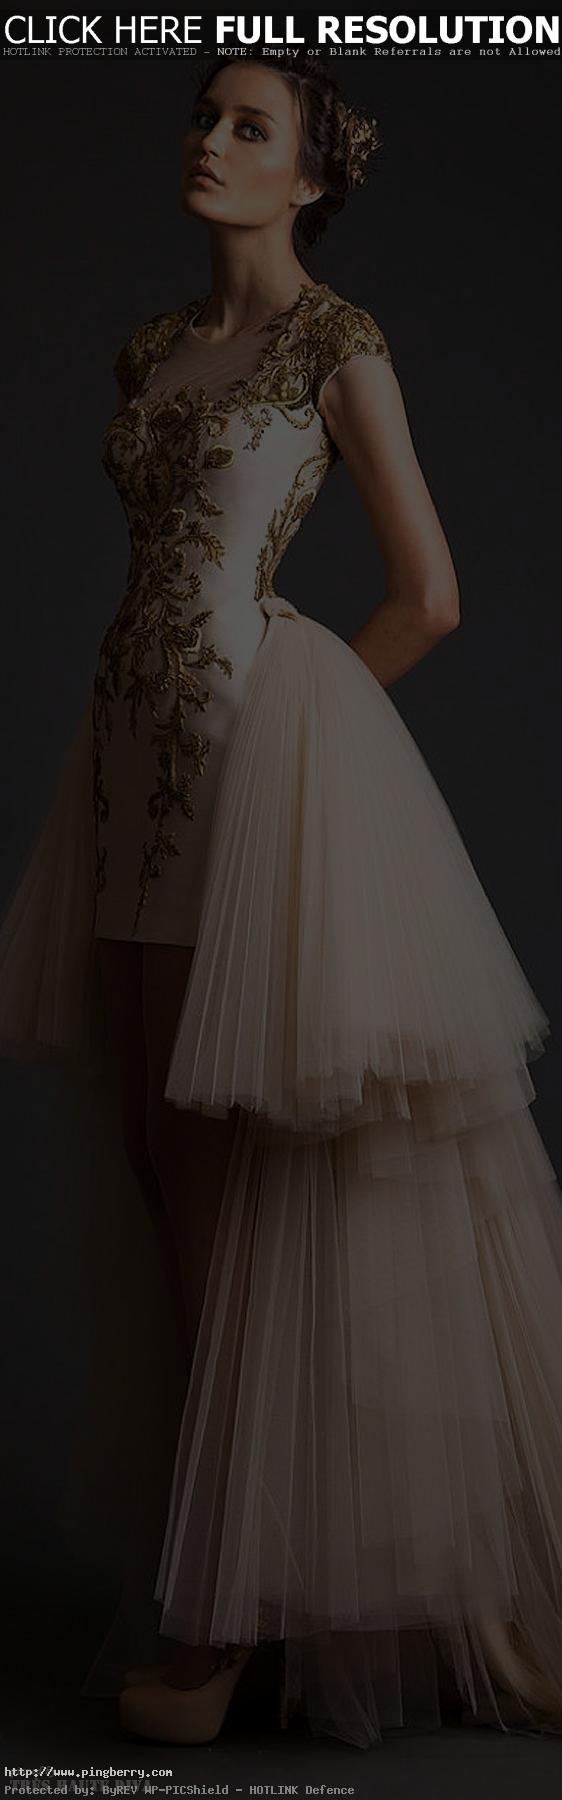 Krikor Jabotian Couture S/S 2014 Brocade Dress | #FashionInPics...